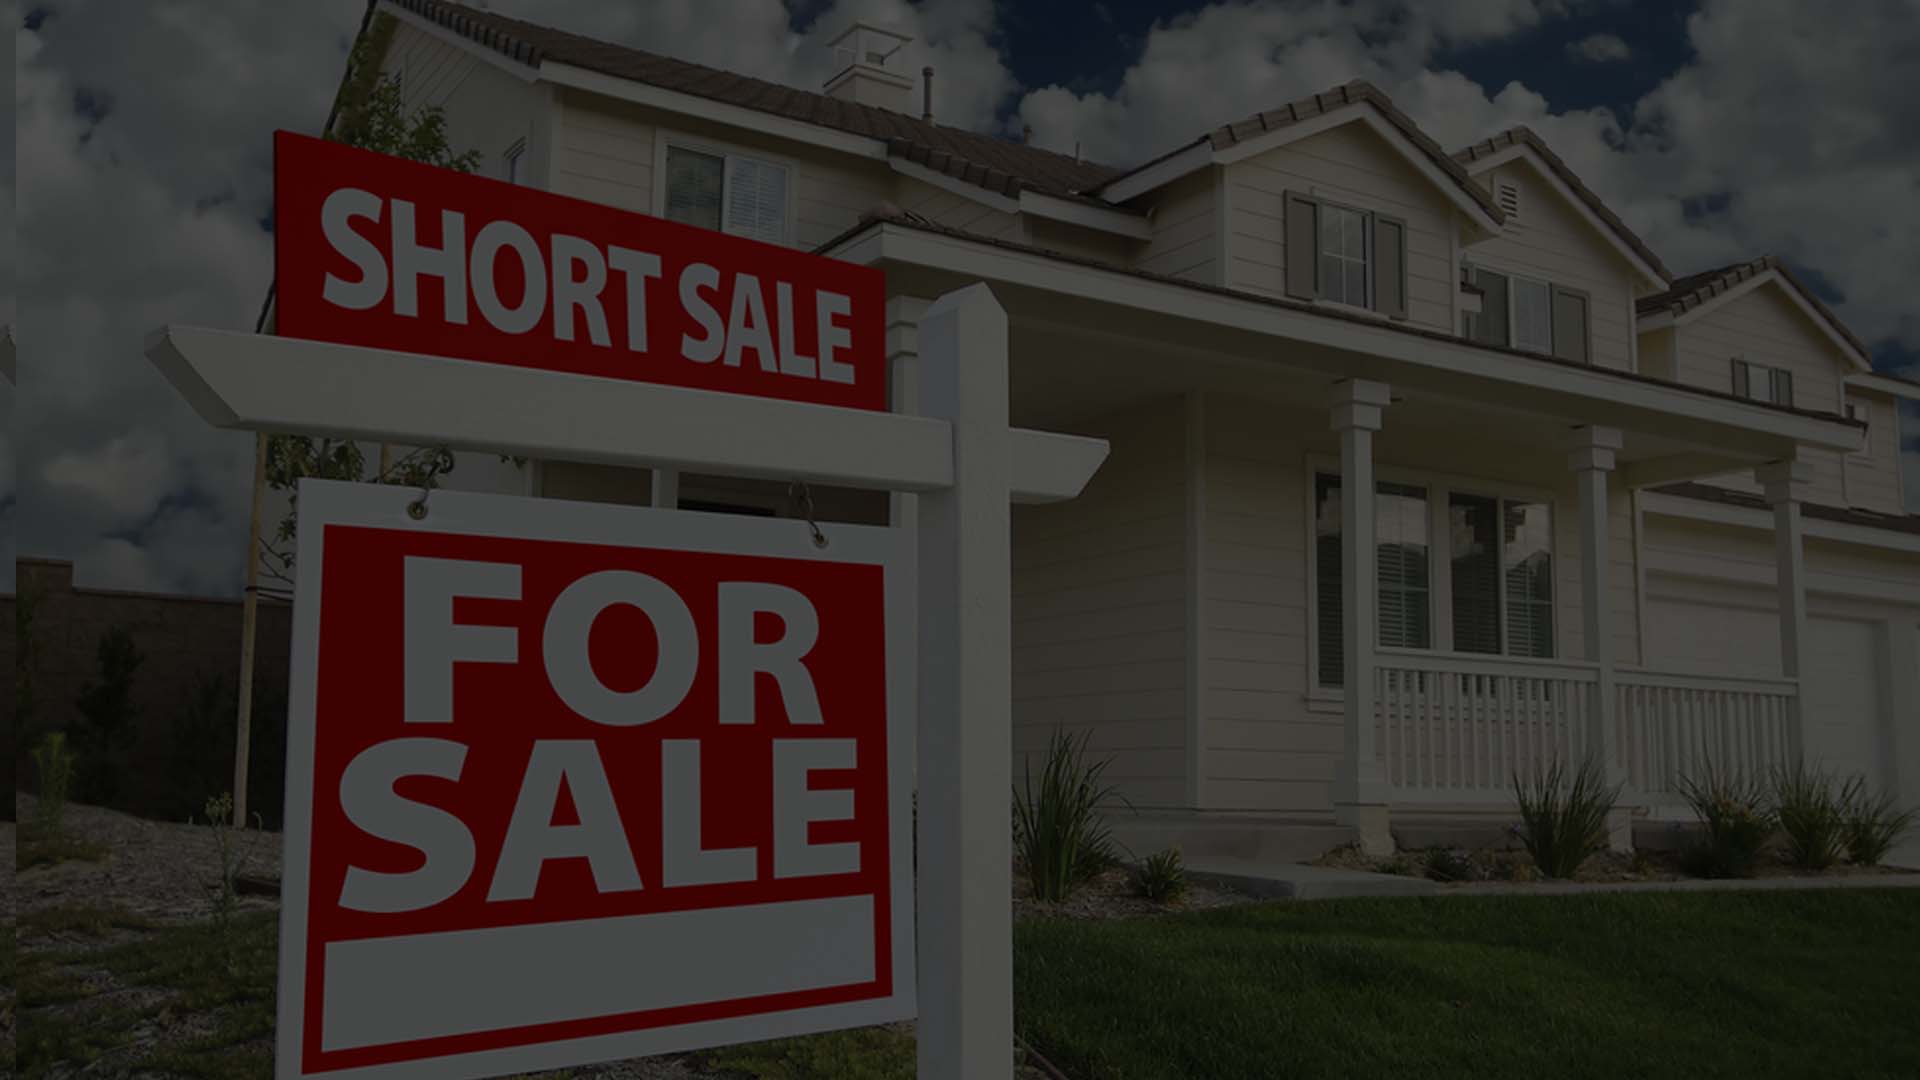 Short Sale Real Estate | Long Island, NY | ResolutionRealtyLI.com